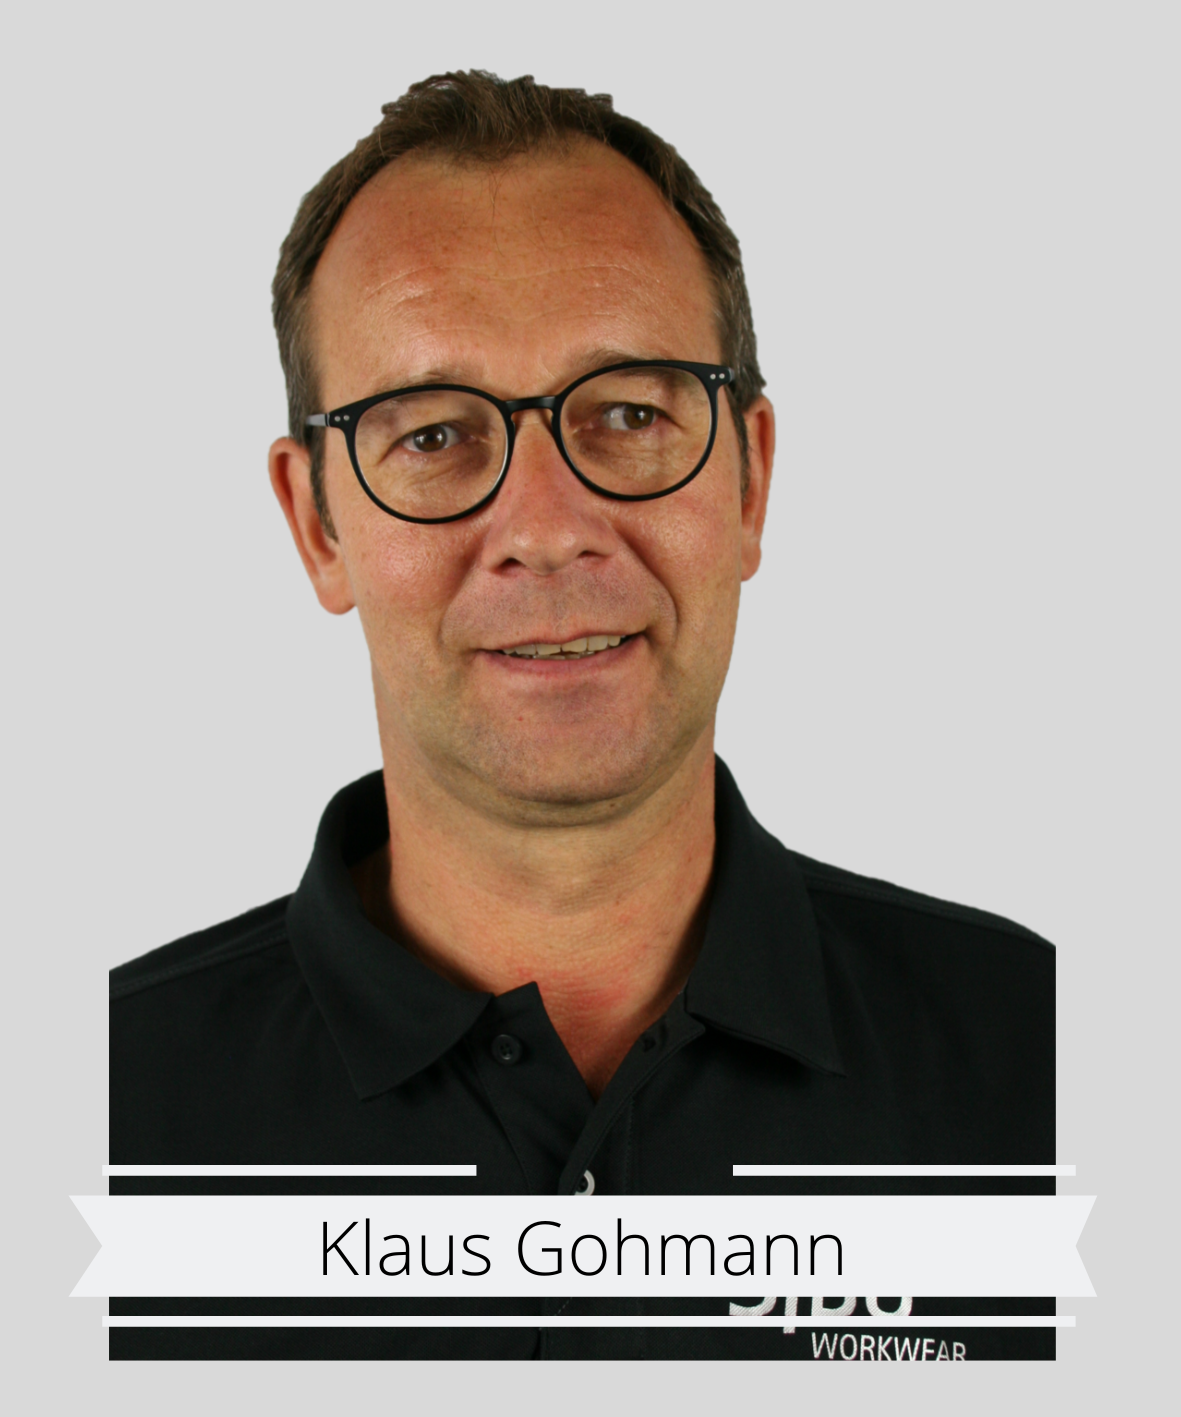 Klaus Gohmann